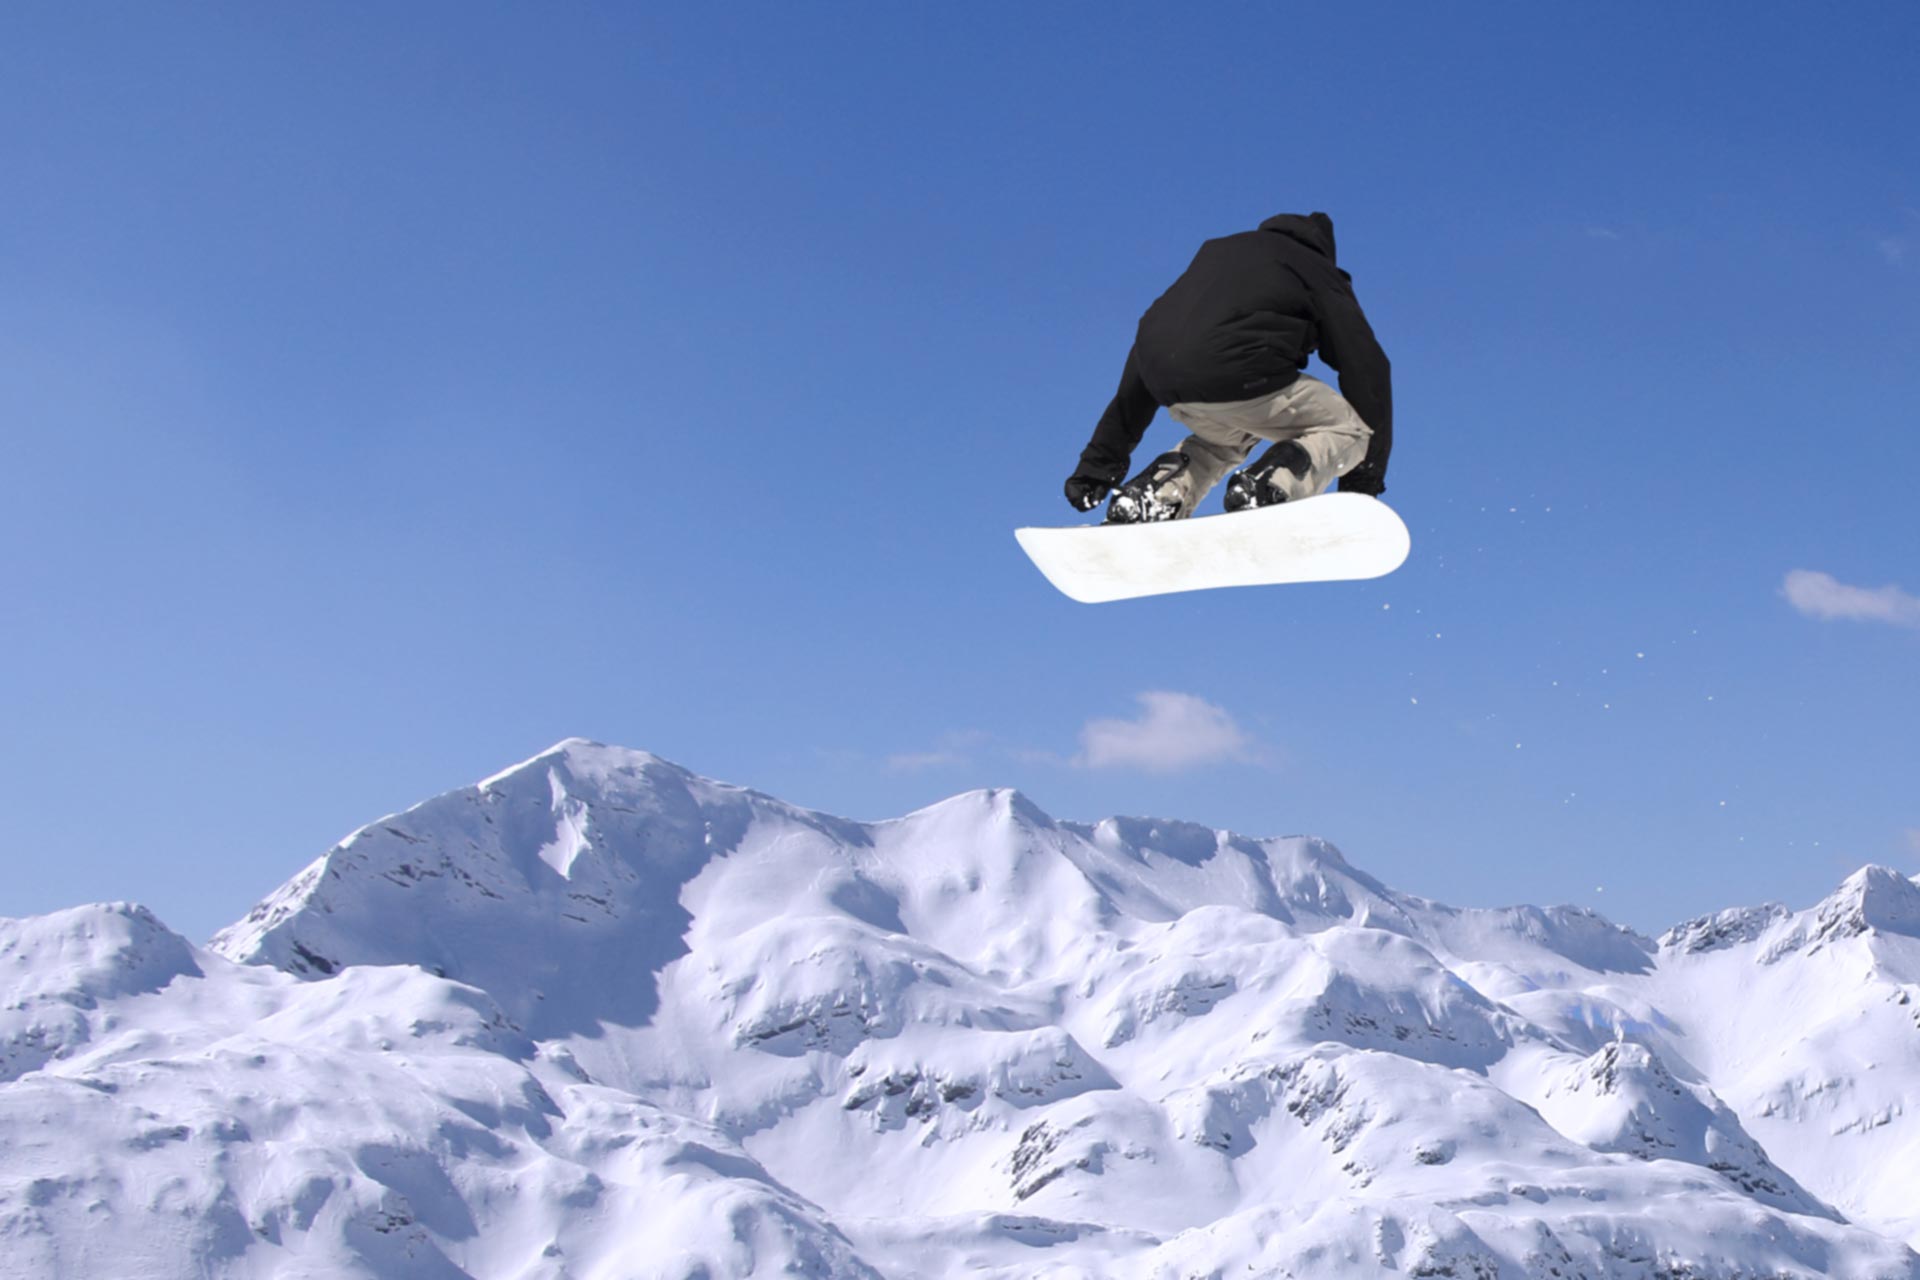 TD3 Snowboard